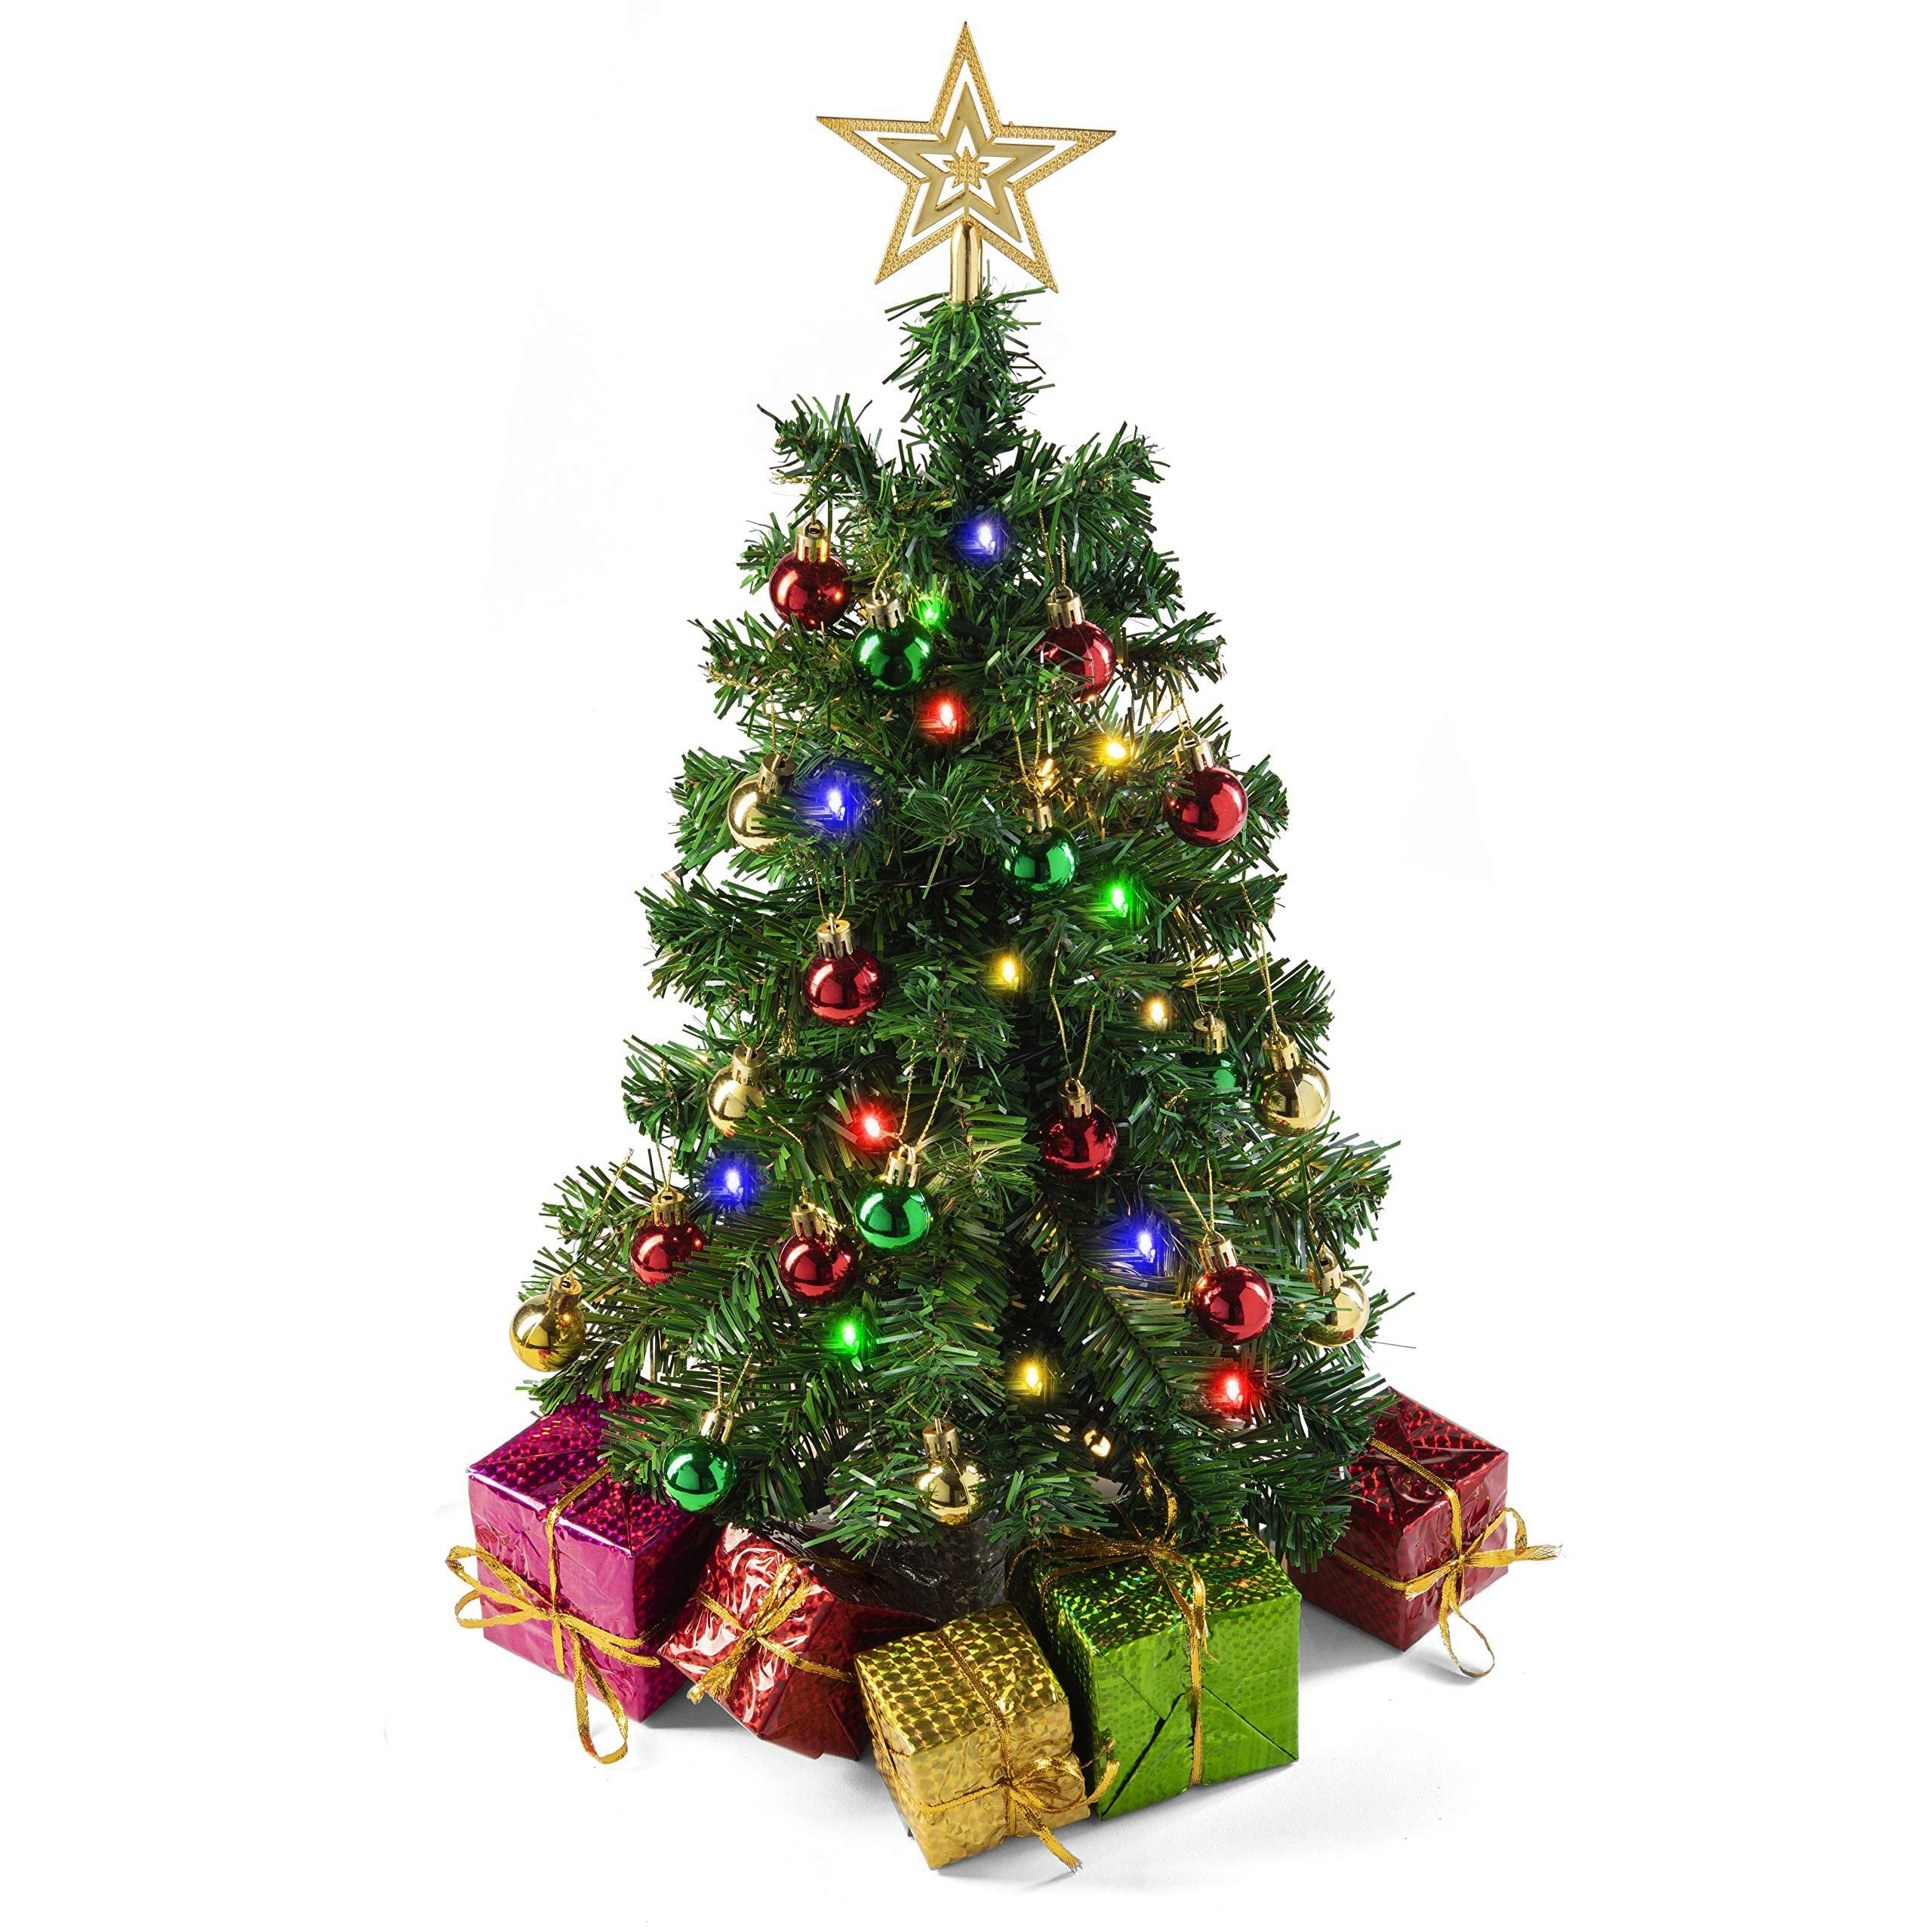 Prextex 23” Mini Black Christmas Tree with Lights Ornaments & Presents - Small Black Christmas Tree with Lights Black Mini Christmas Tree - Warm White LED Lights